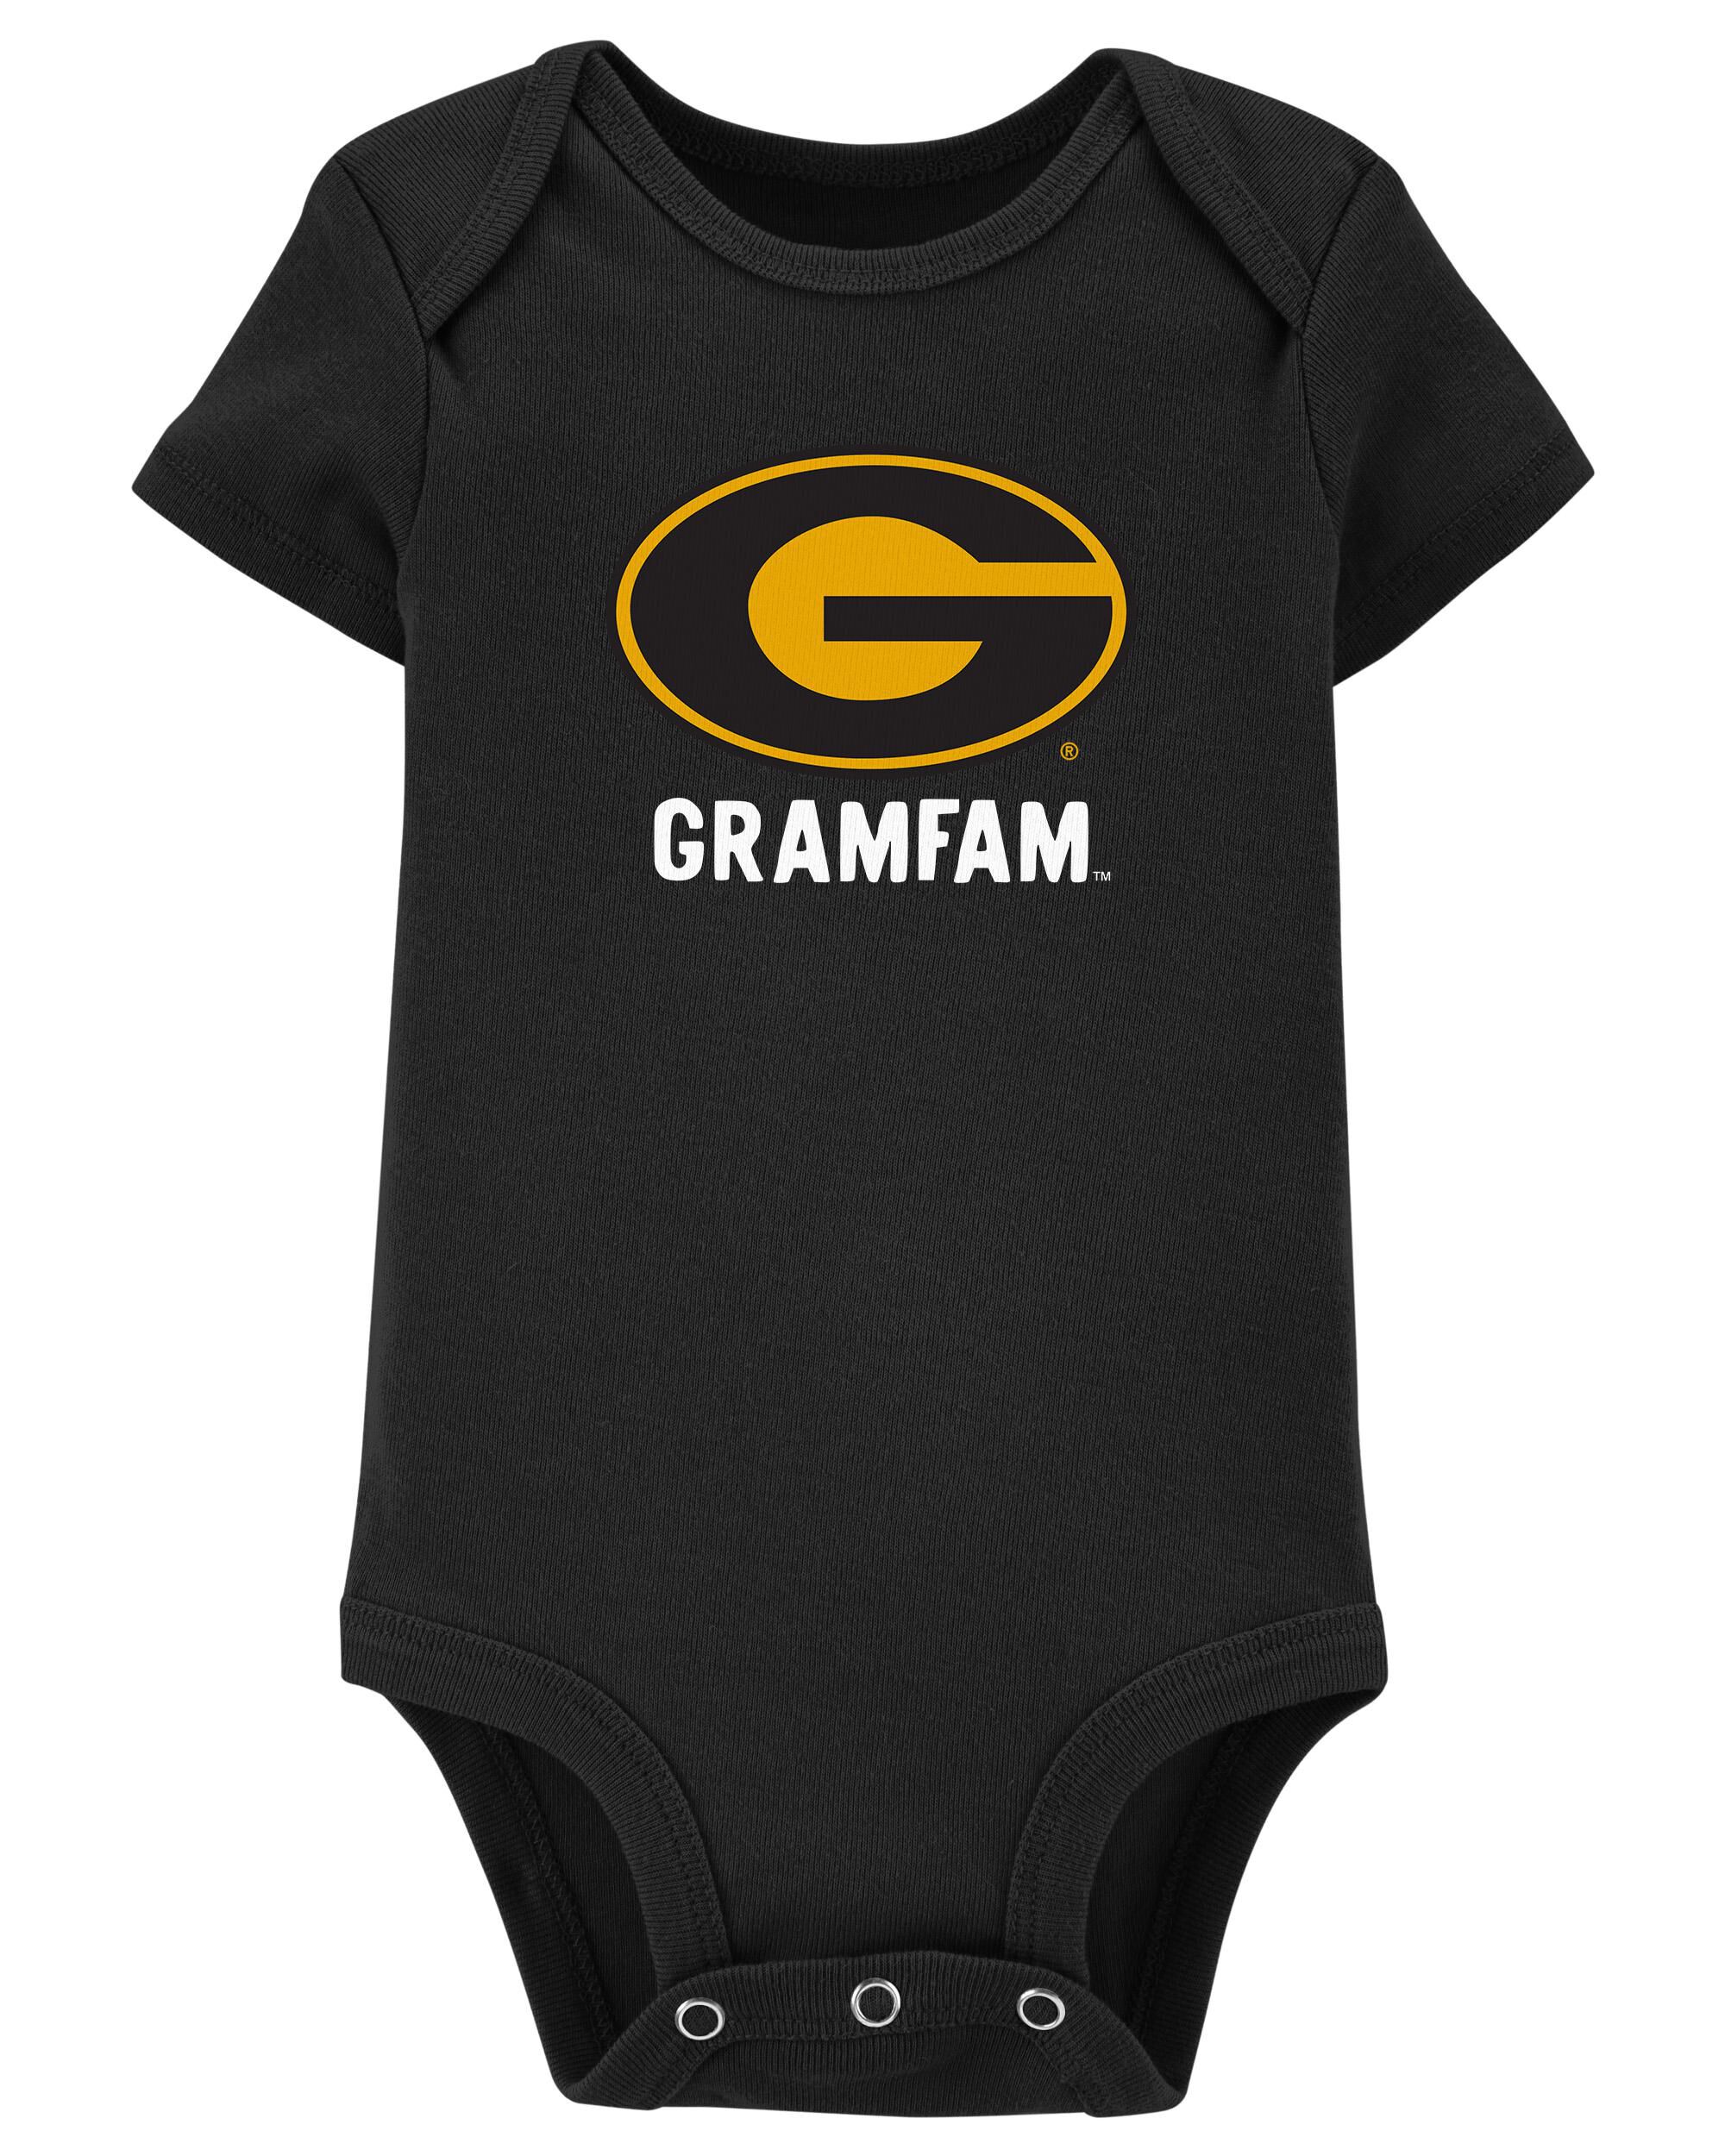 Carters Baby Grambling State University Bodysuit